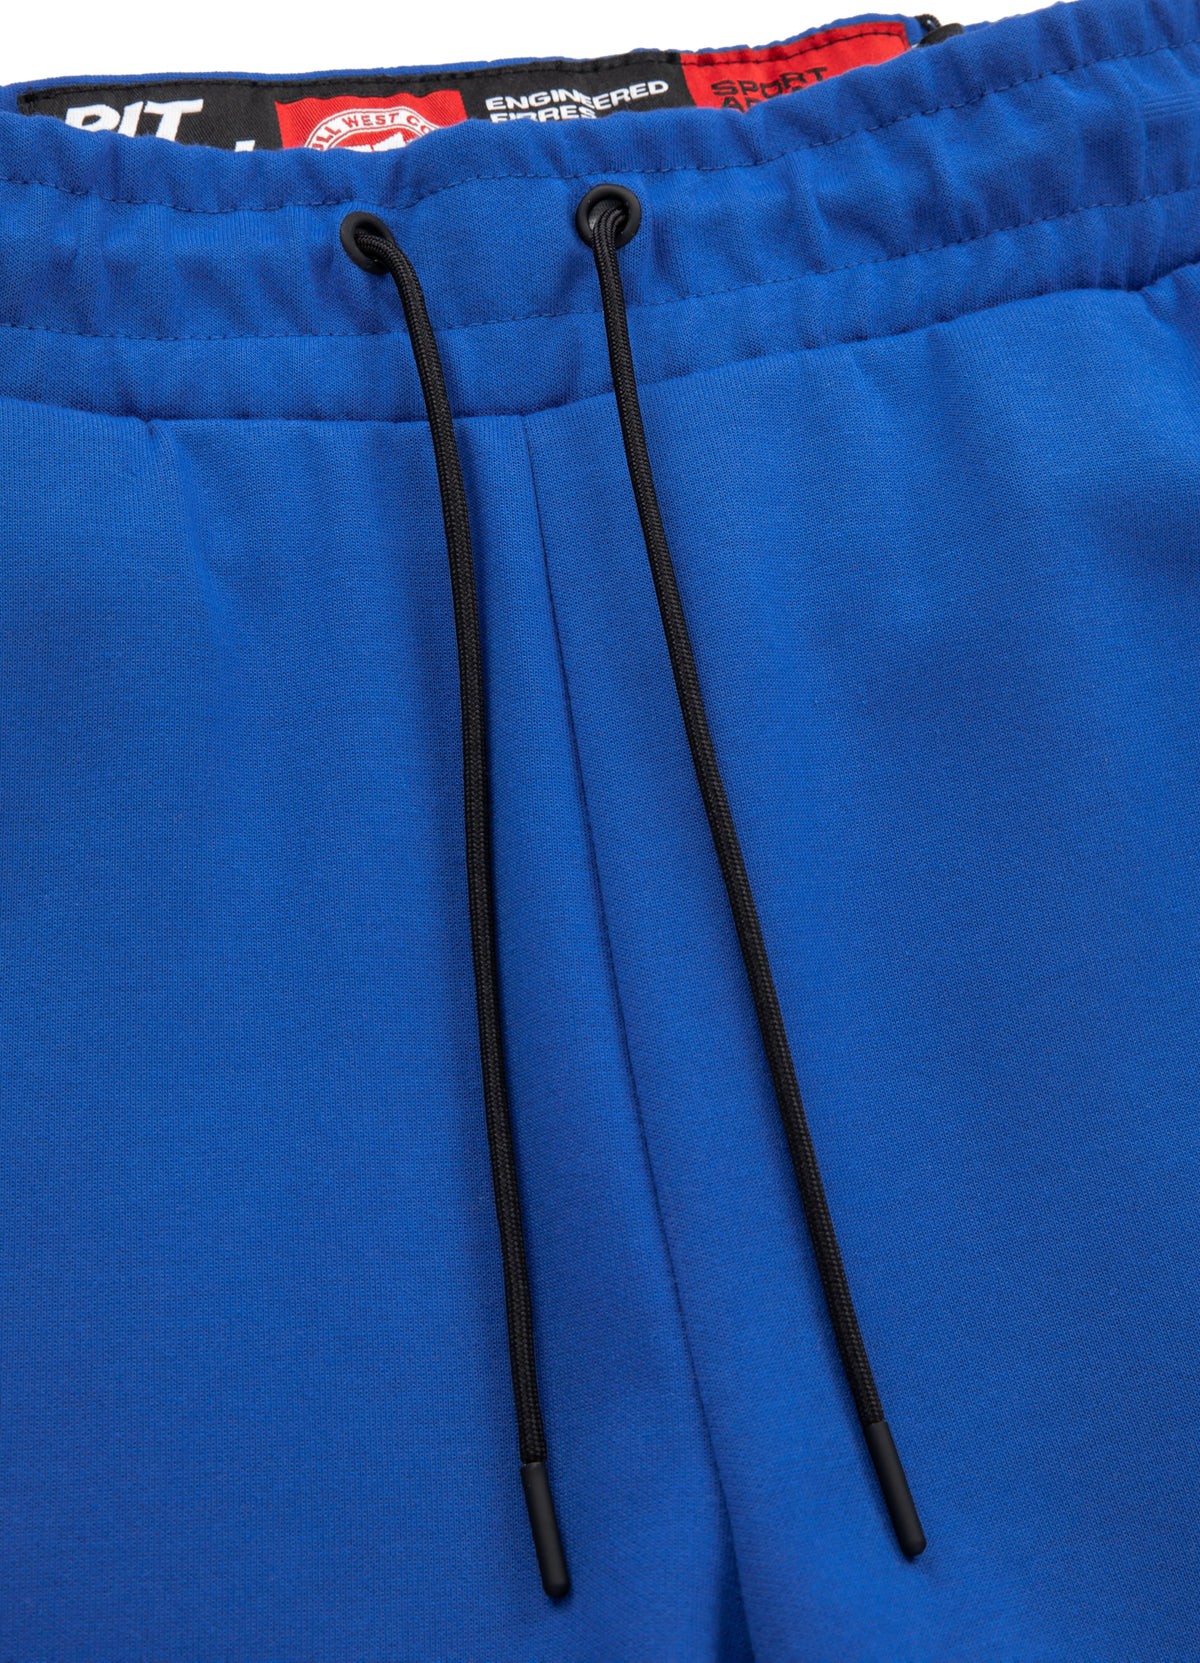 ALCORN Royal Blue Shorts.